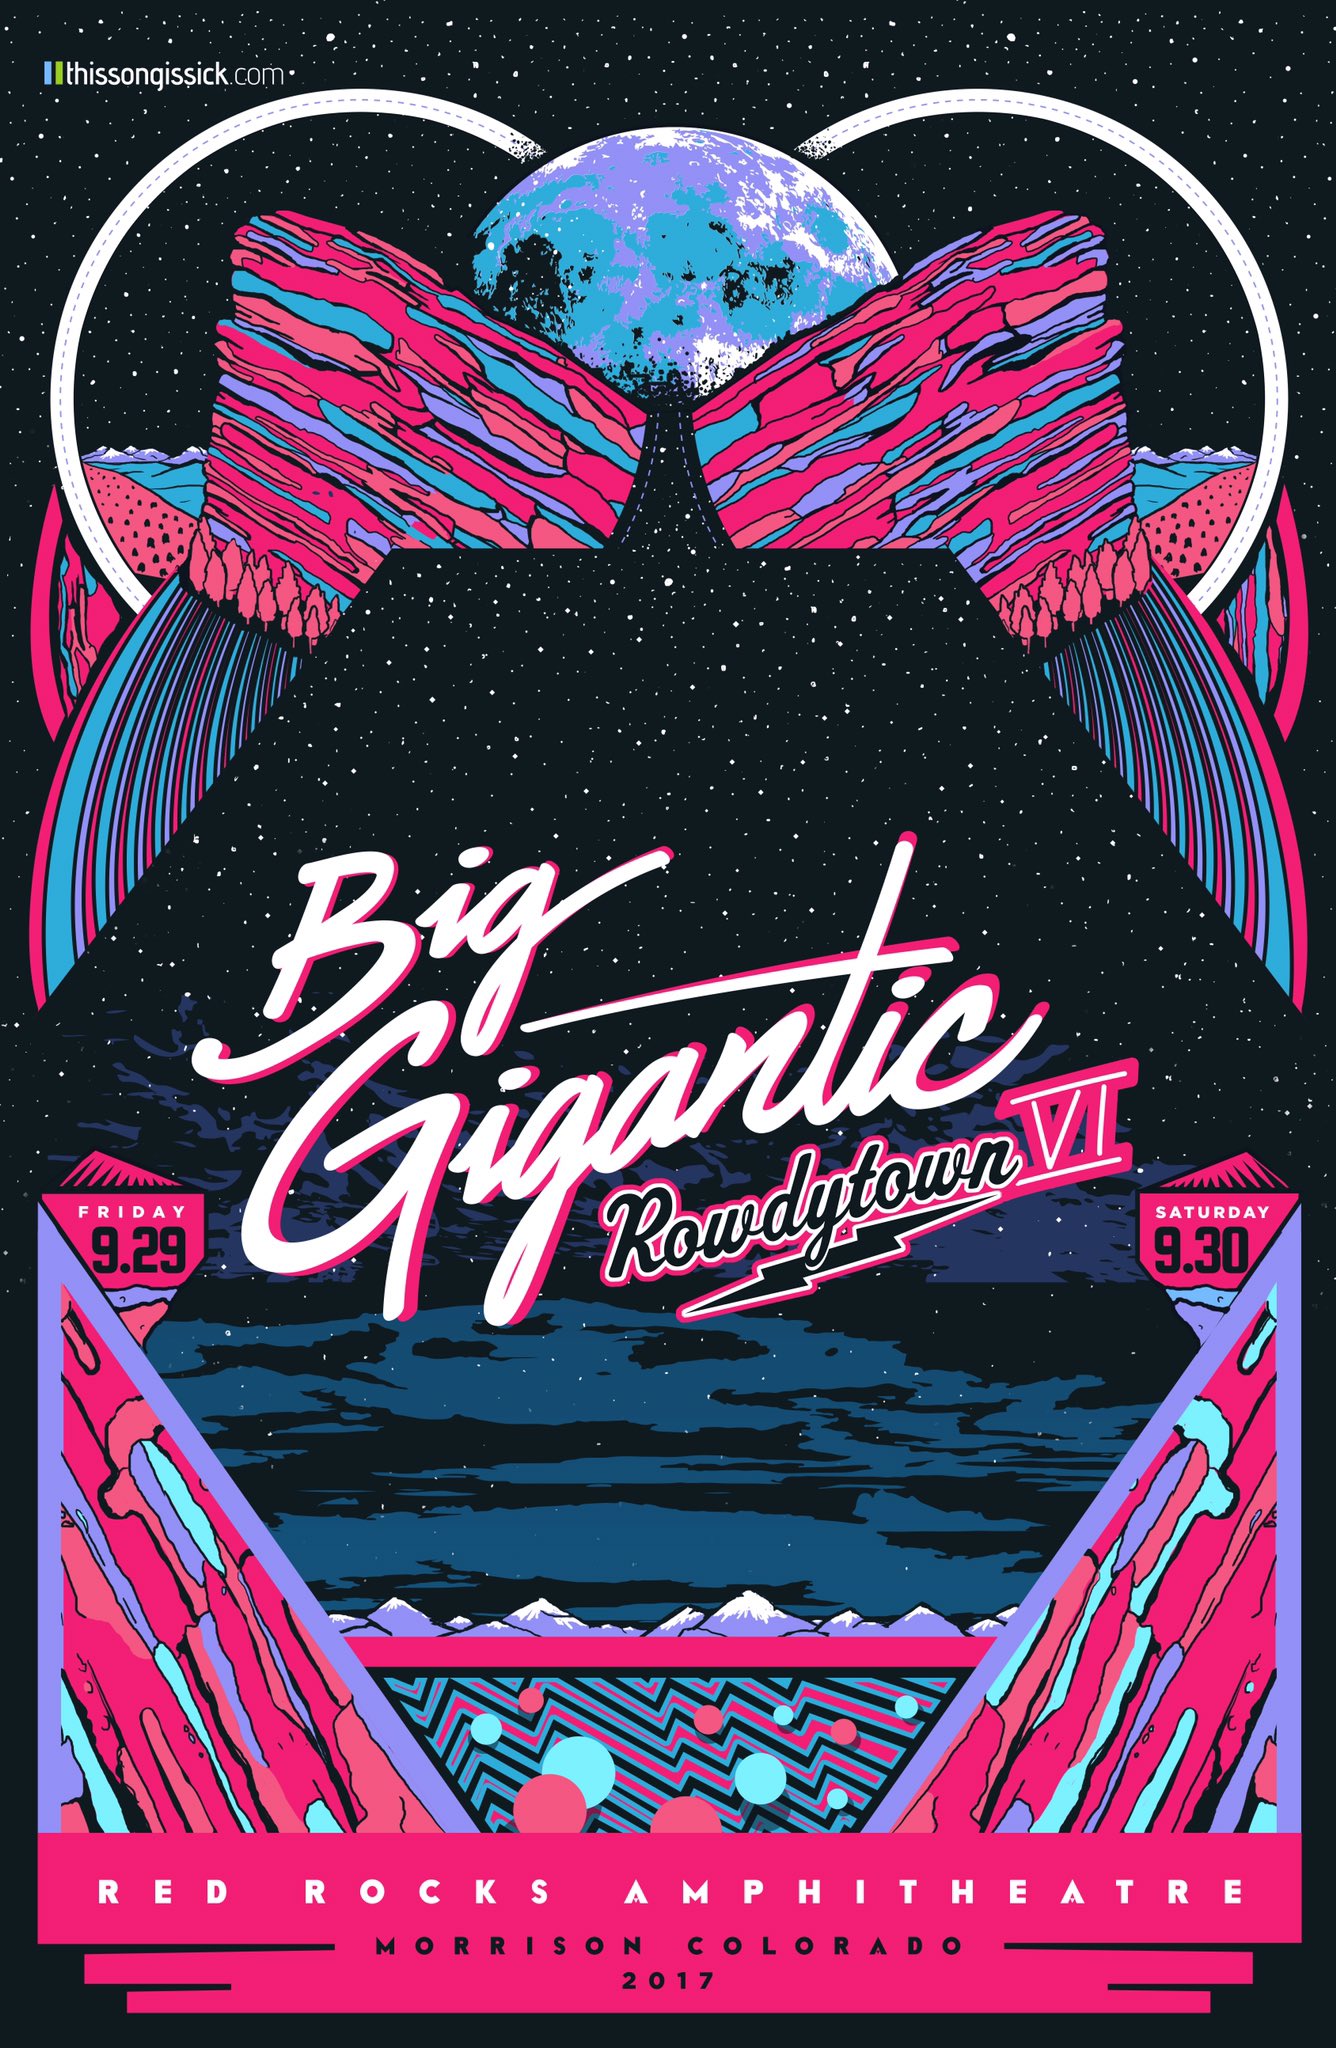 Big Gigantic Announced Rowdytown VI at Red Rocks Amphitheatre